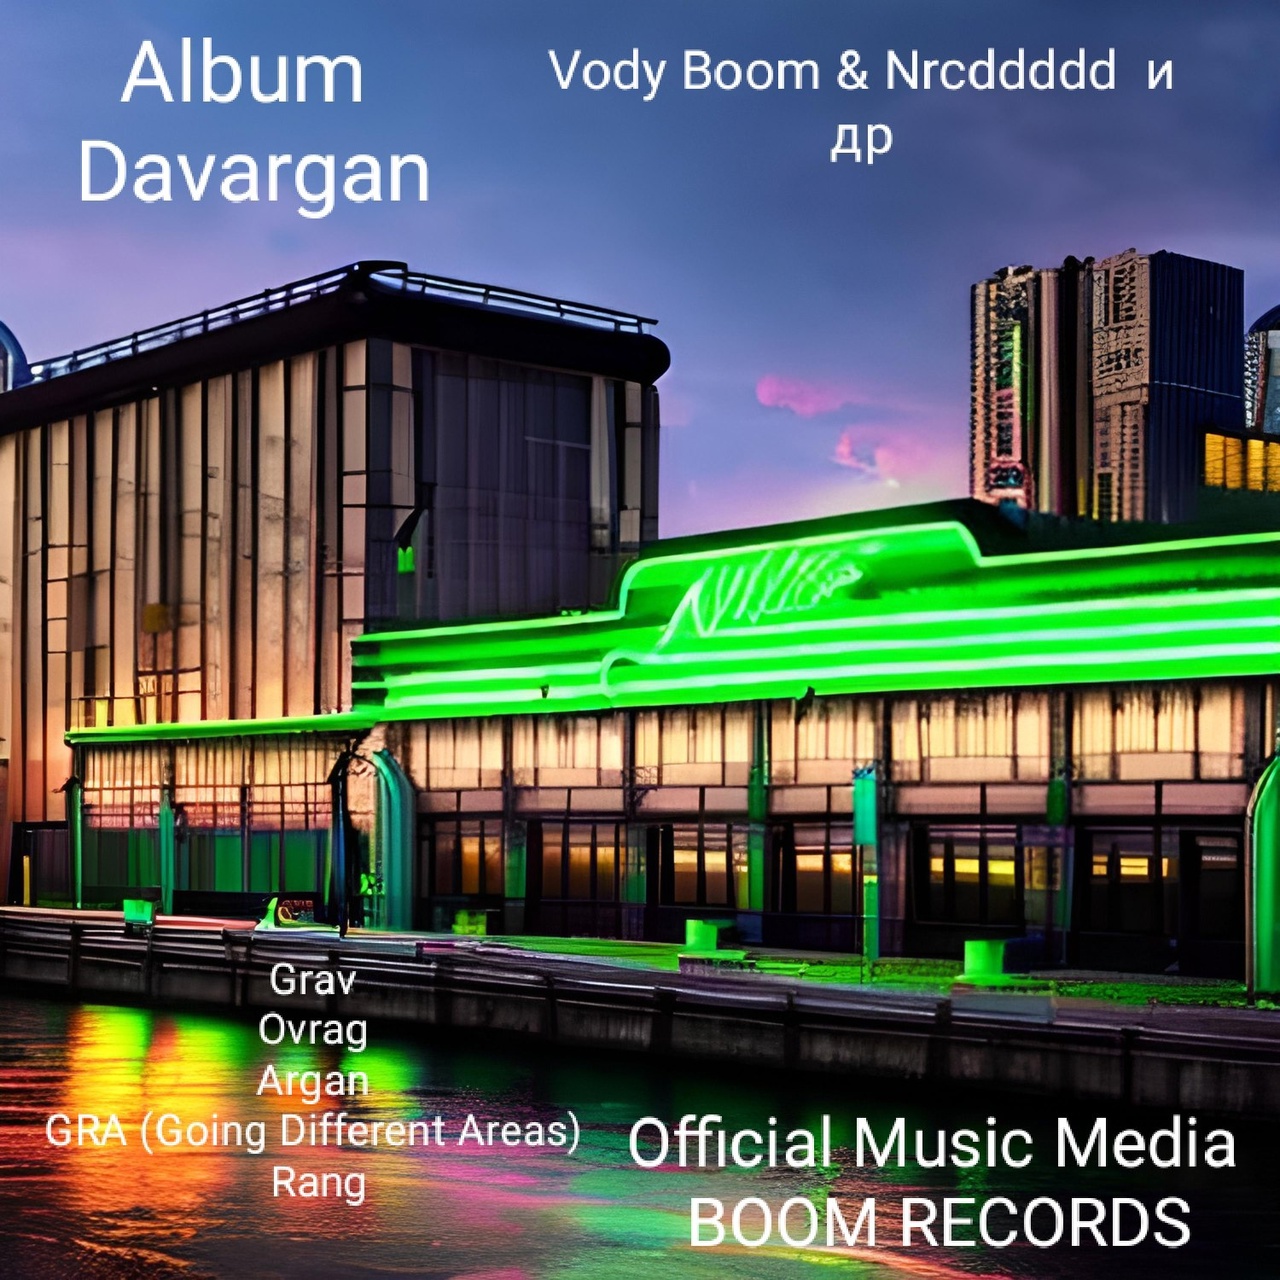 Vody Boom & DJ Nrcddddd — GRA (Going Different Areas) cover artwork